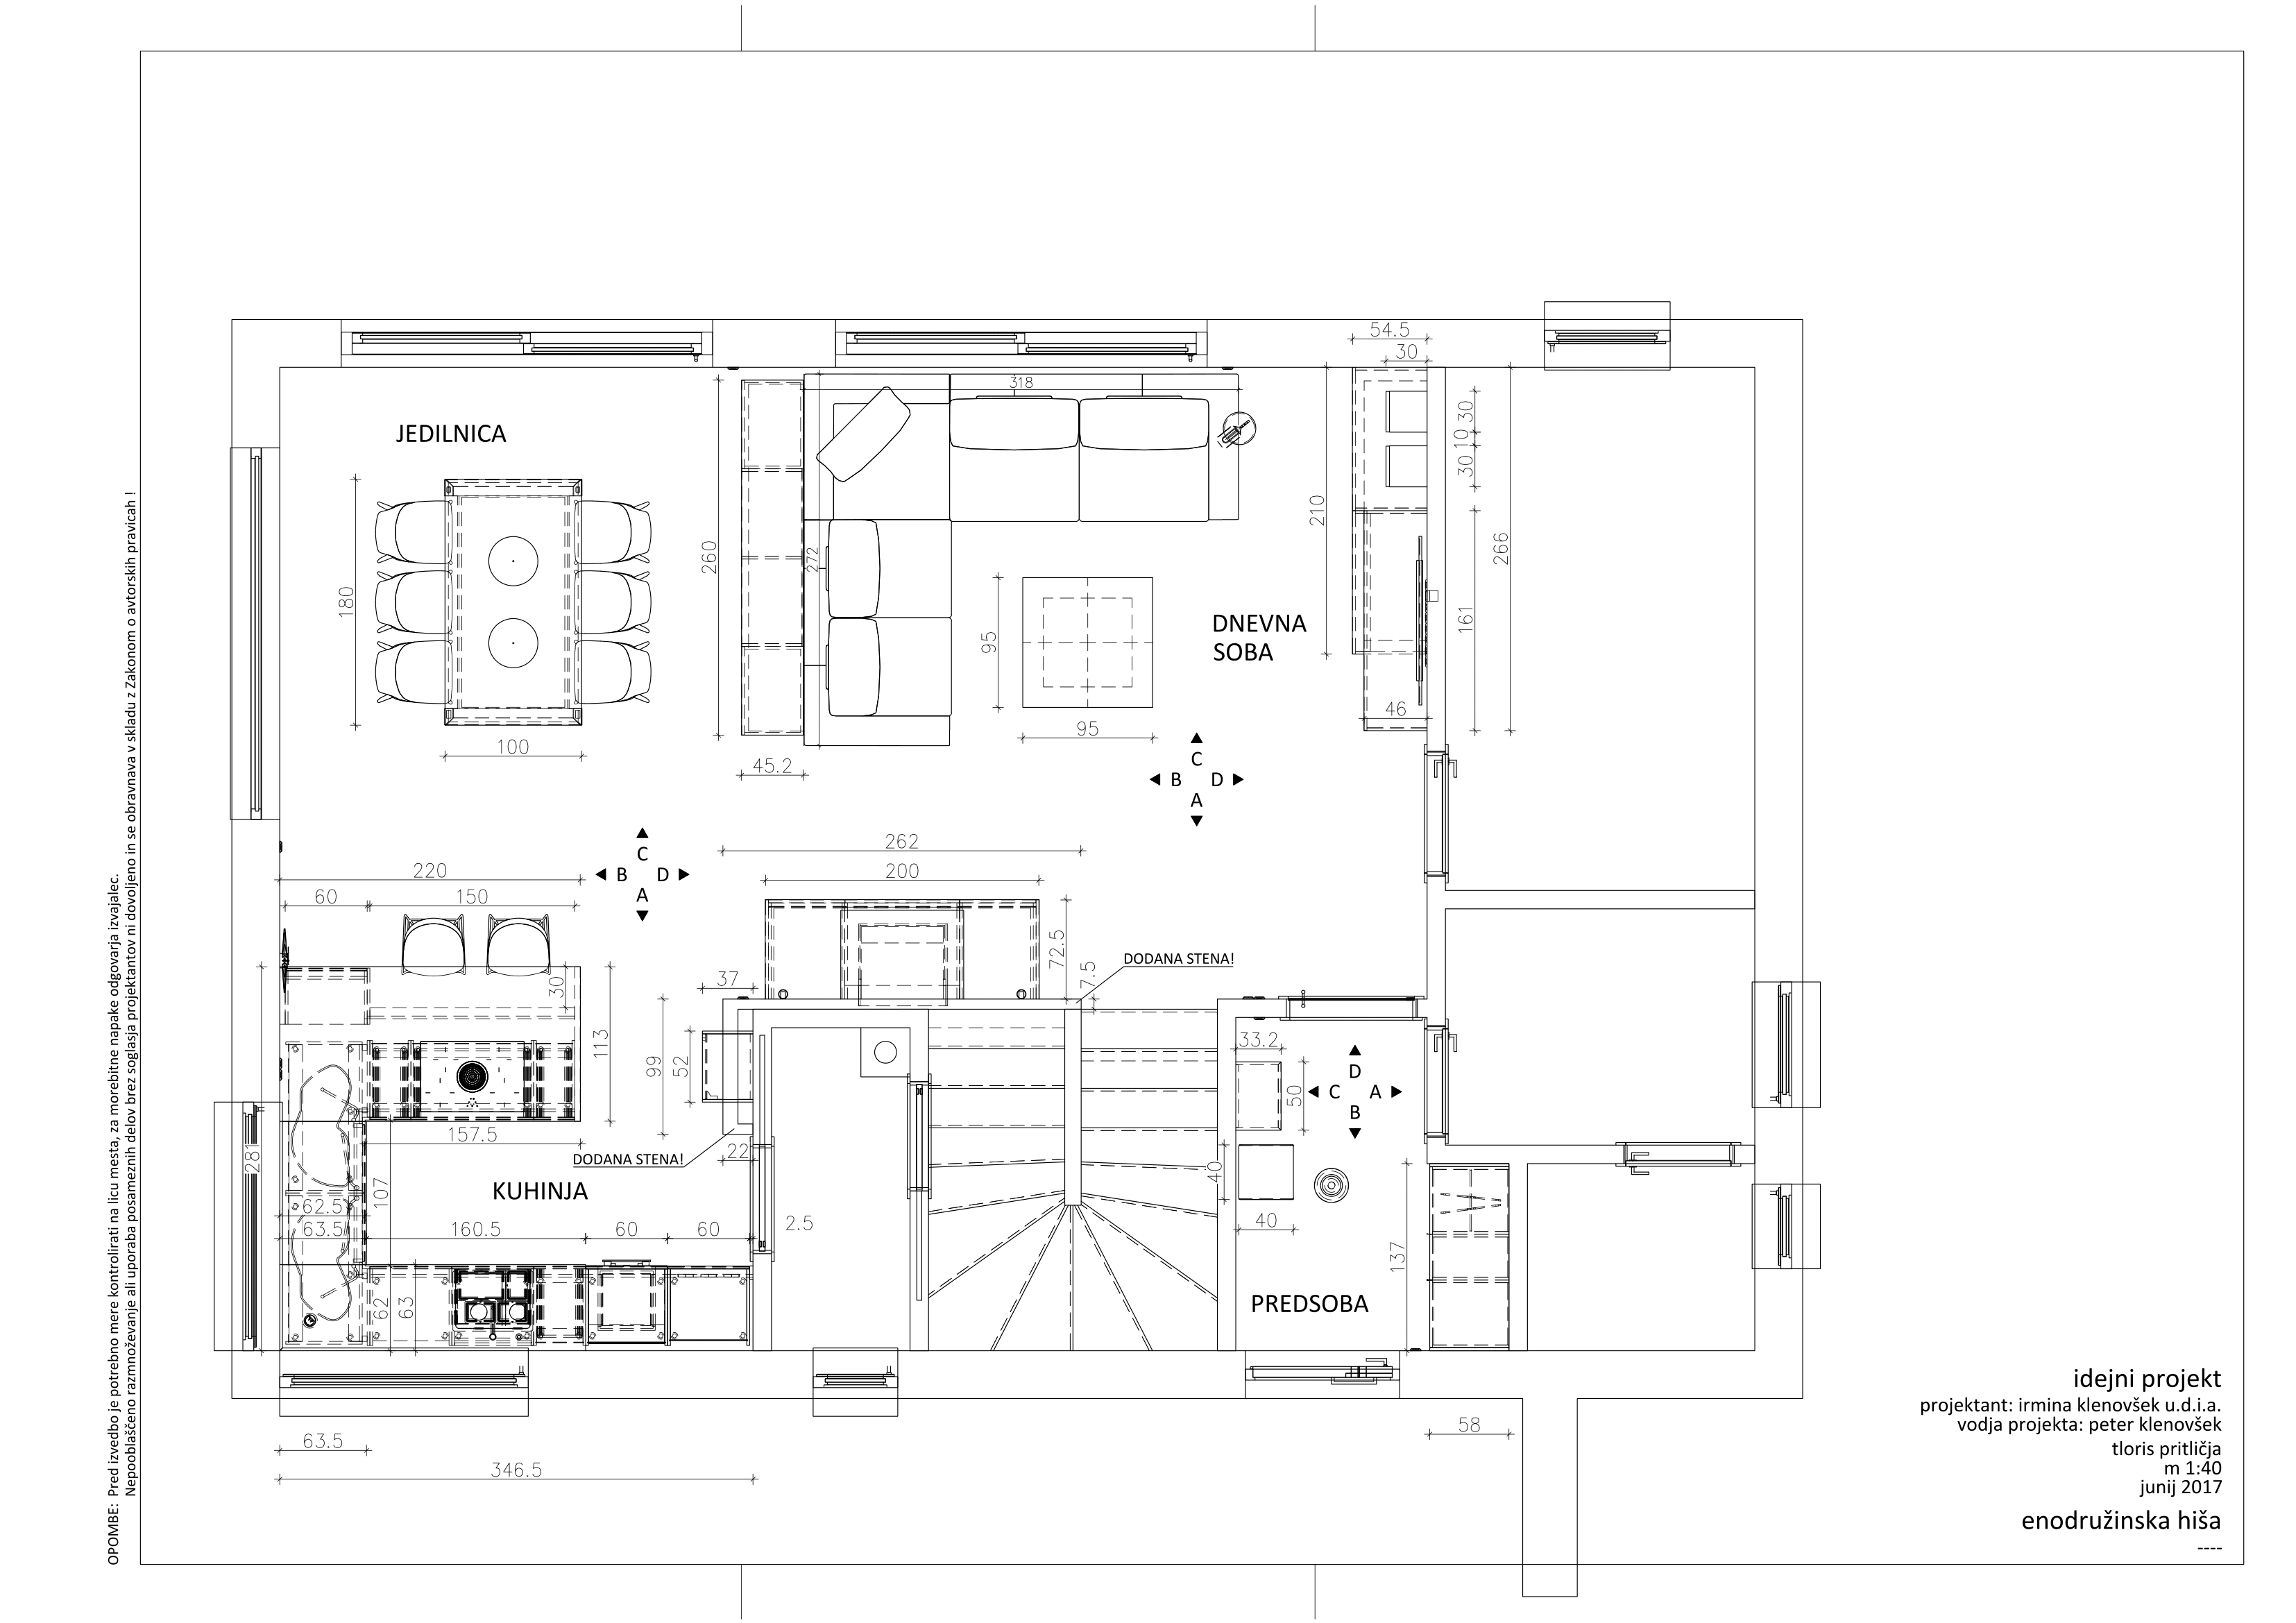 Ground plan of the interior